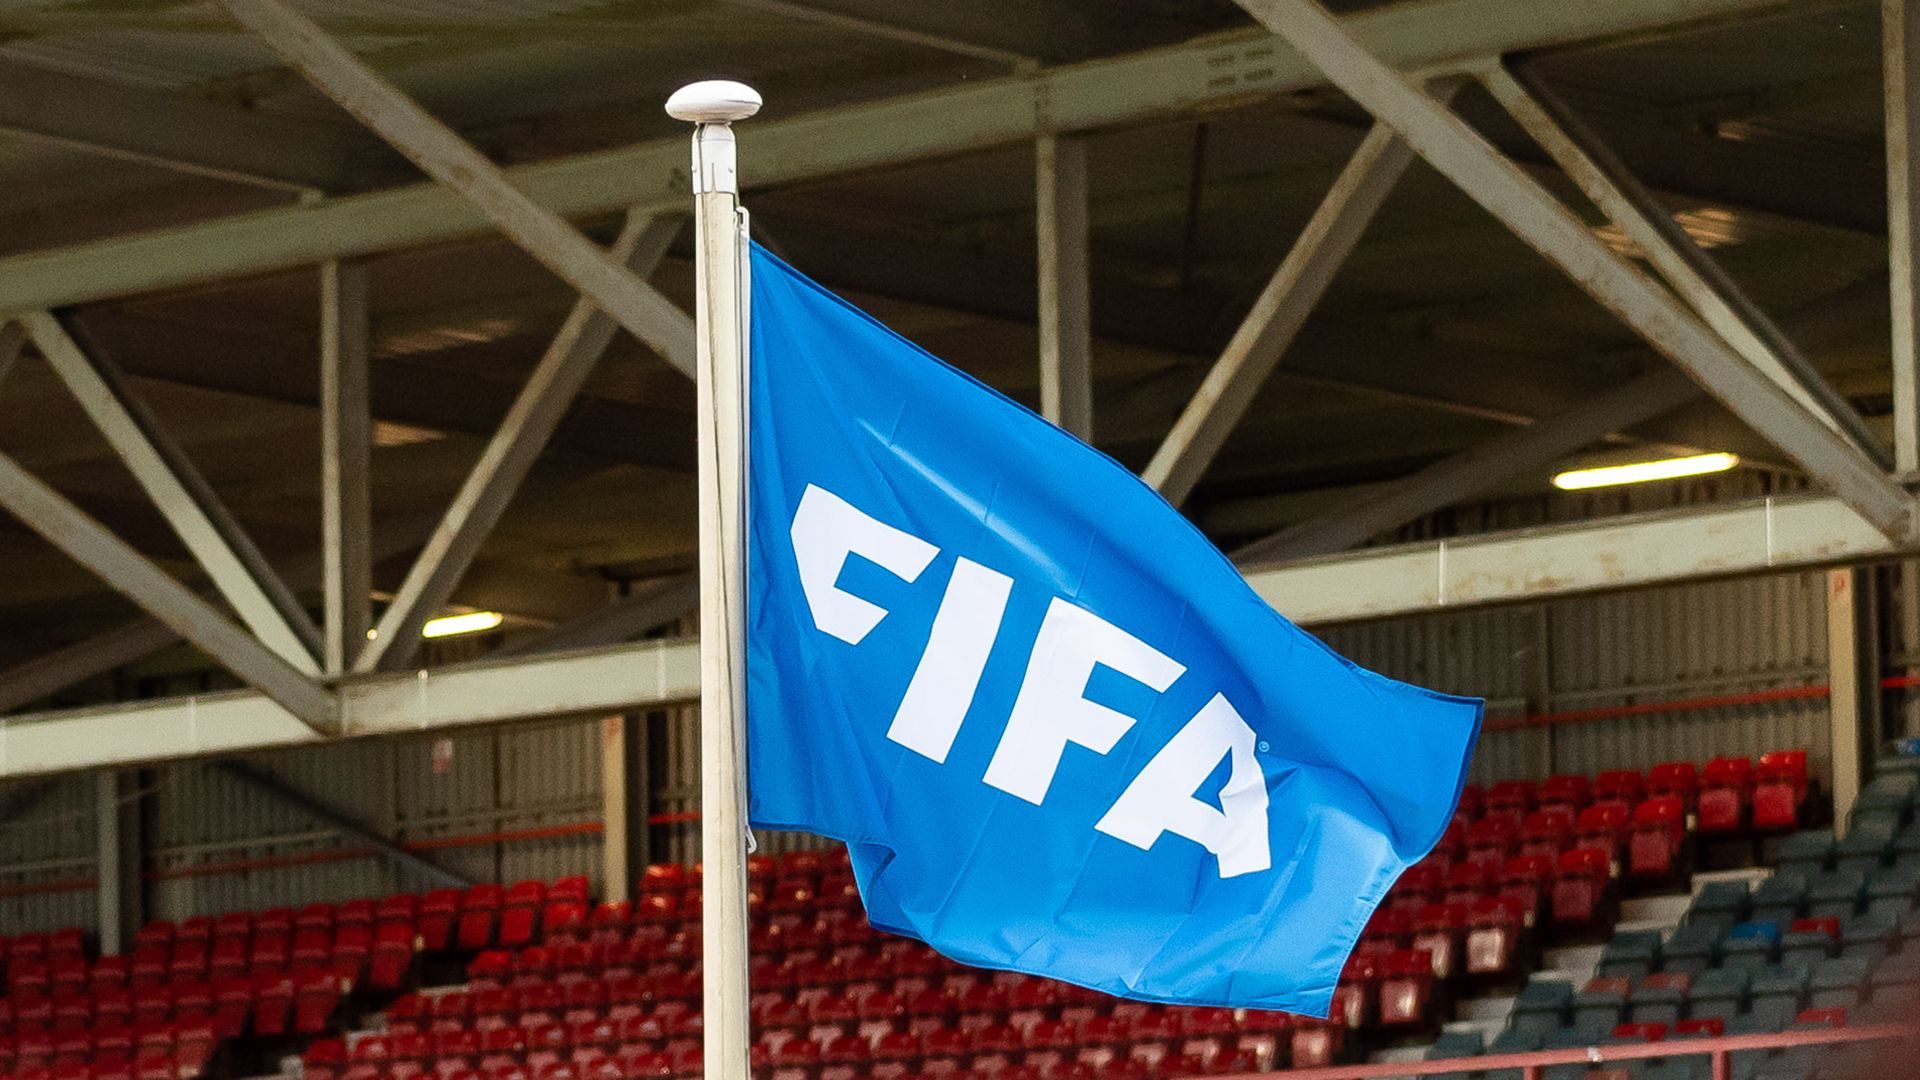 FIFA: Badan sepak bola akan meninjau kebijakan kelayakan transgender |  Berita Sepak Bola